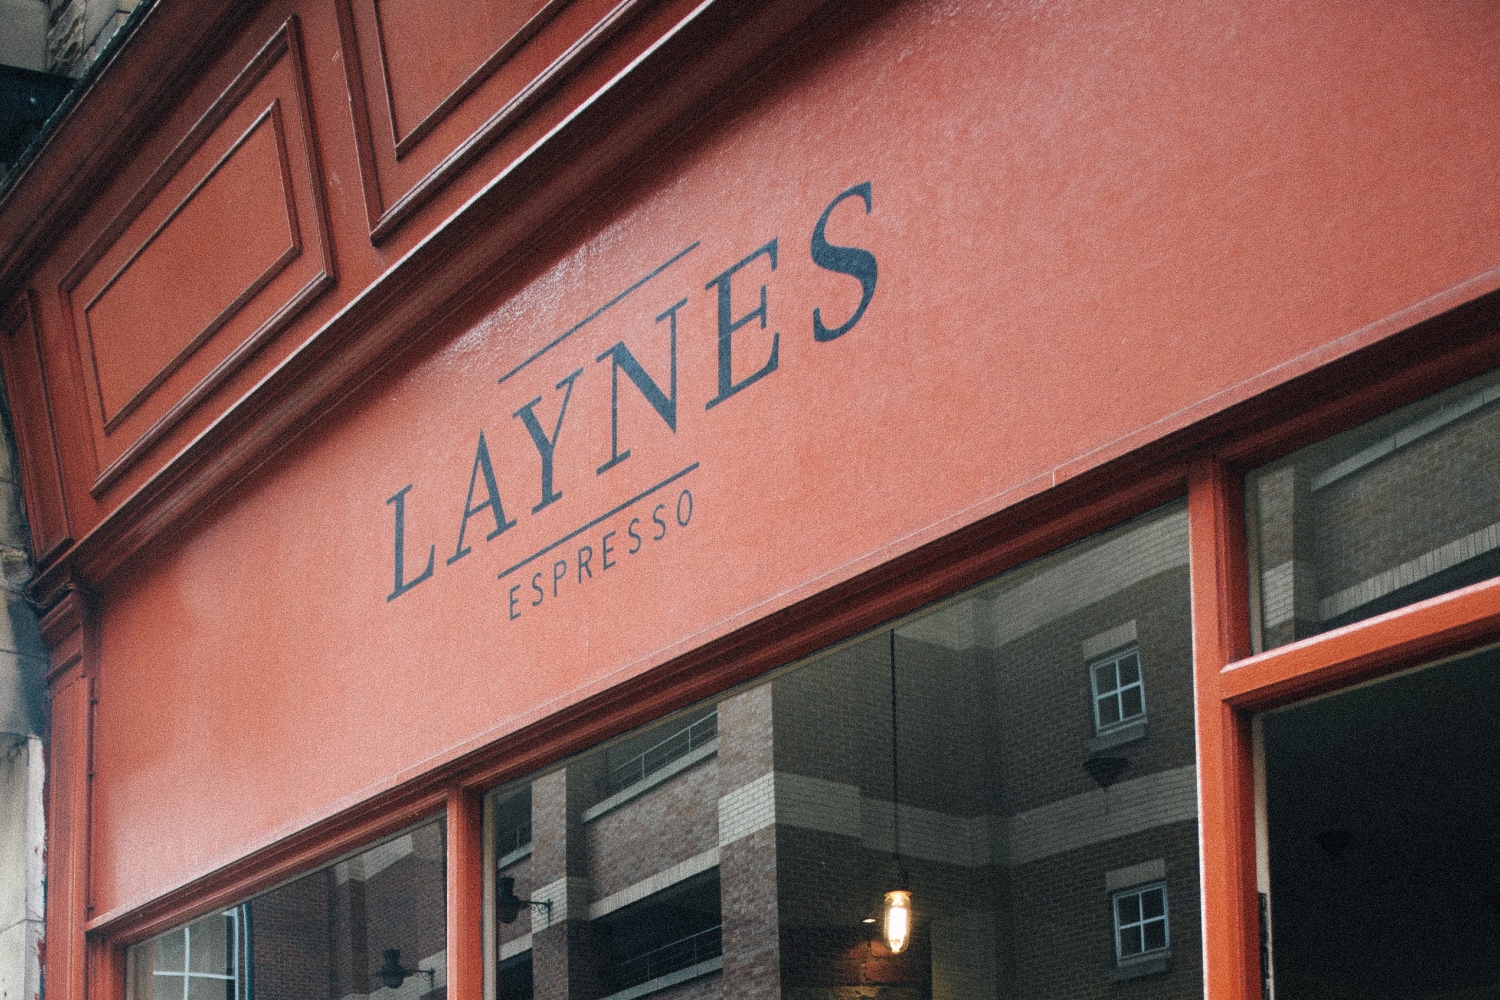 Laynes Espresso